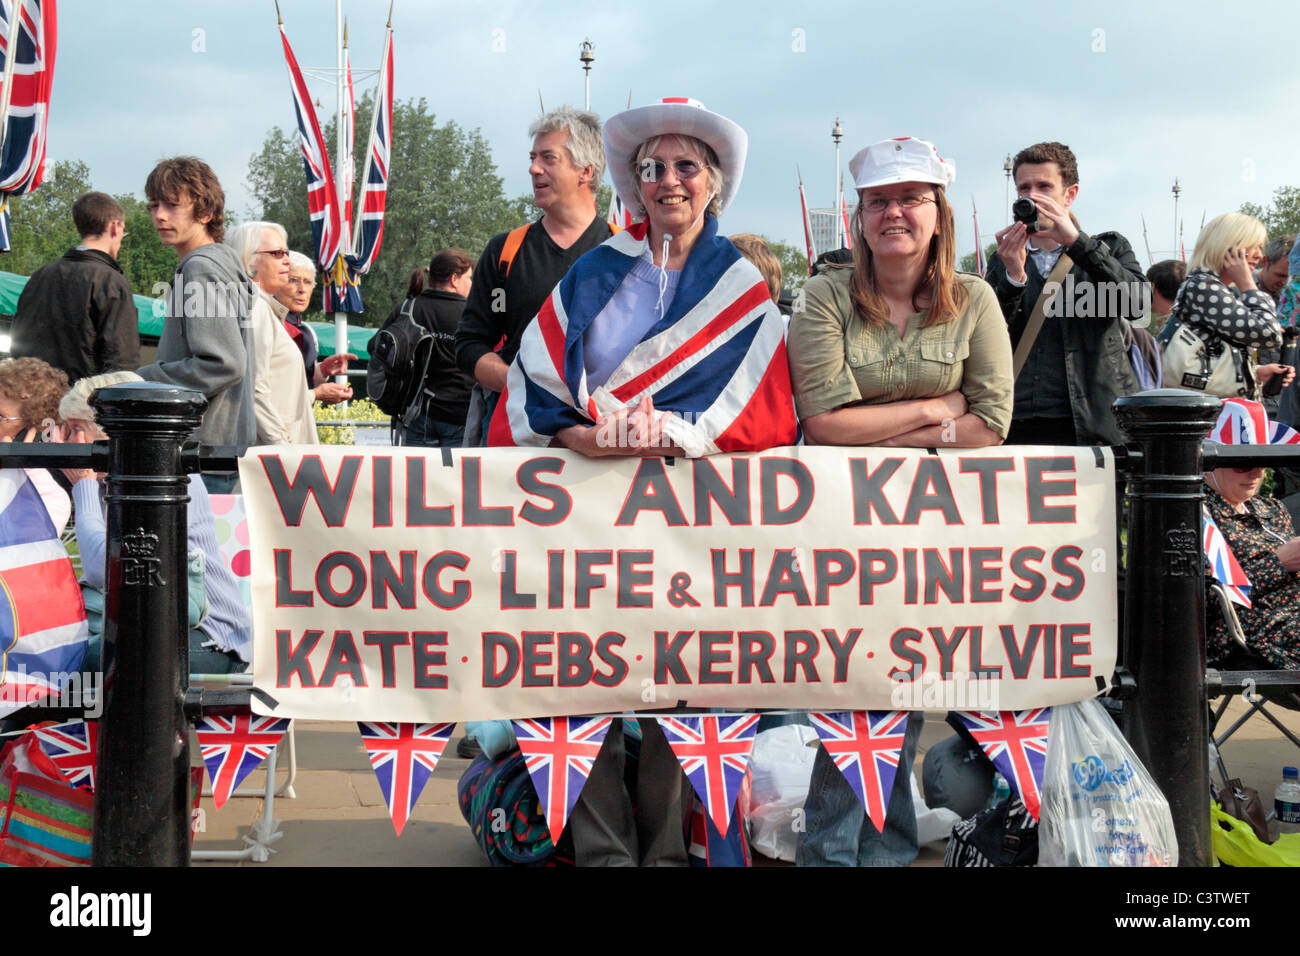 Royal Wedding fans con il loro banner fuori Buckingham Palace la notte prima del Royal Wedding, aprile 2011. Foto Stock